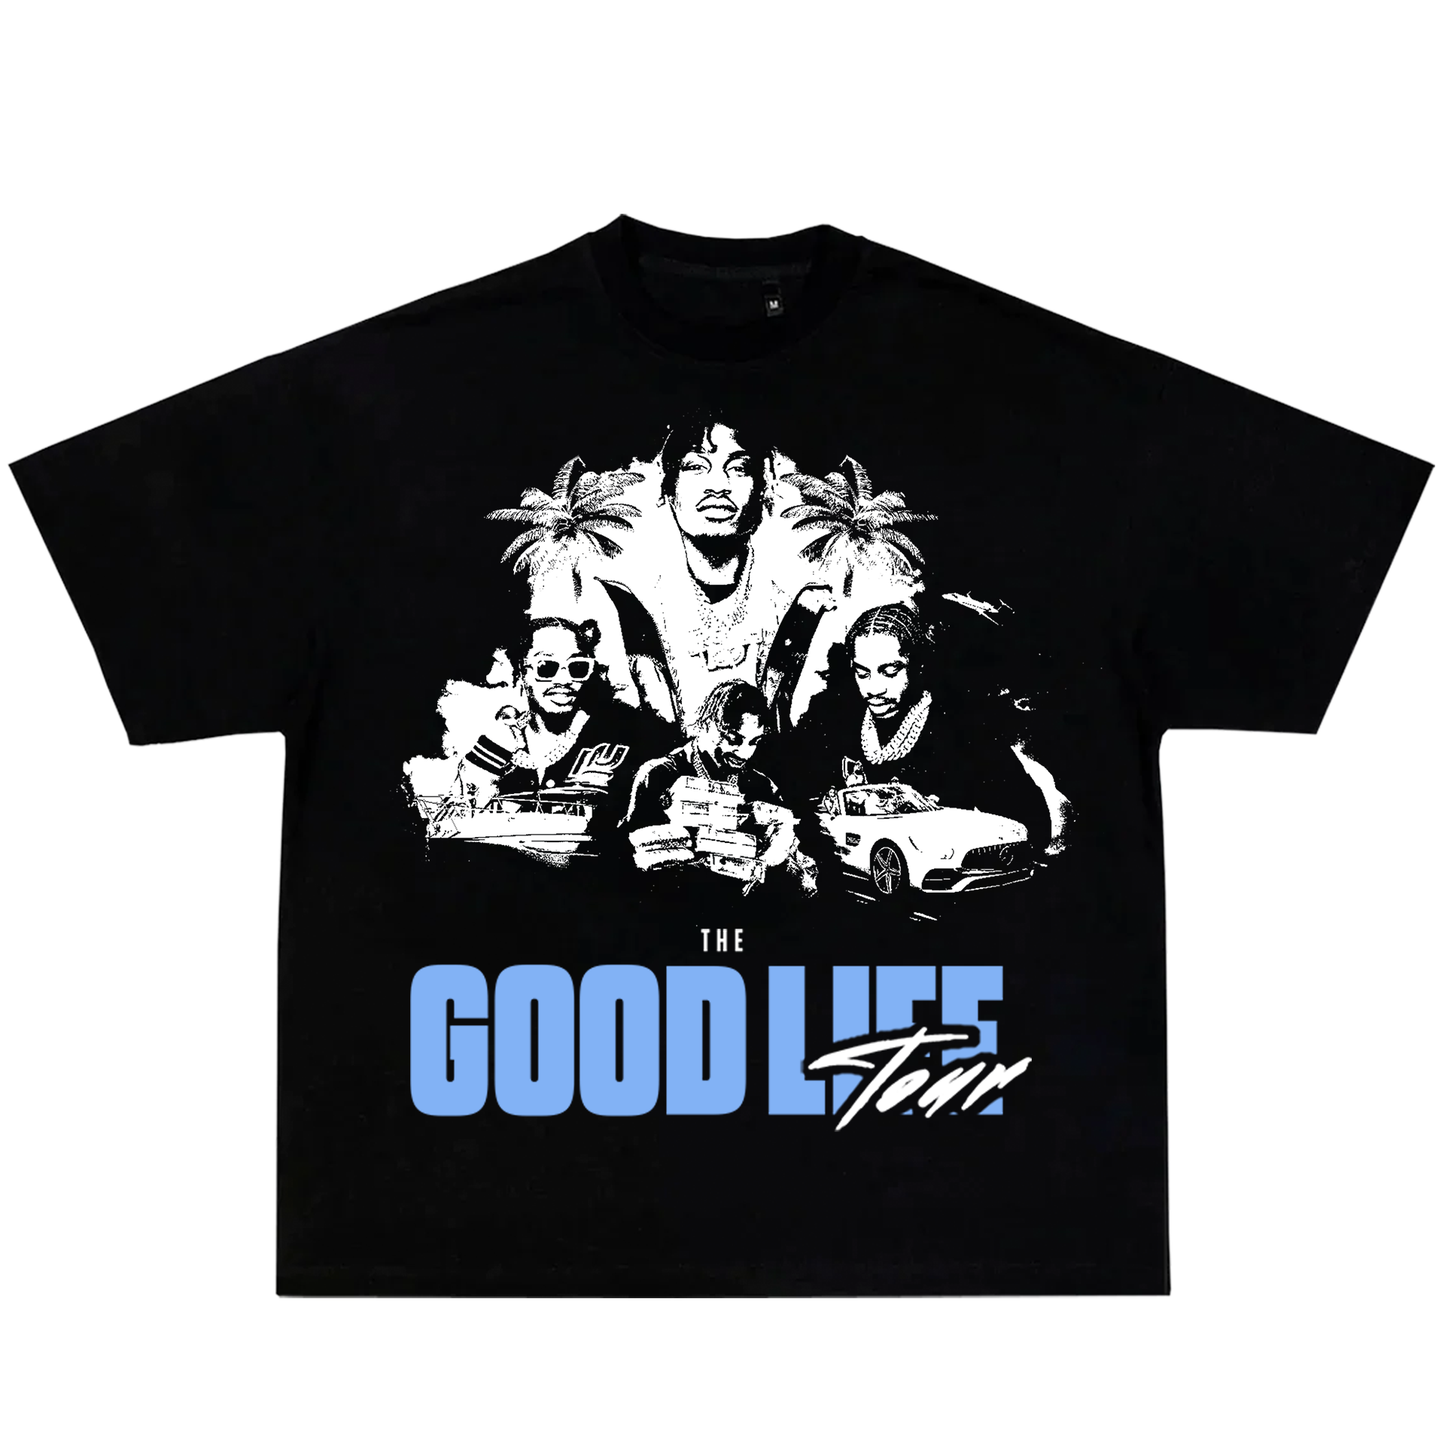 The Good Life "Tour "Tee